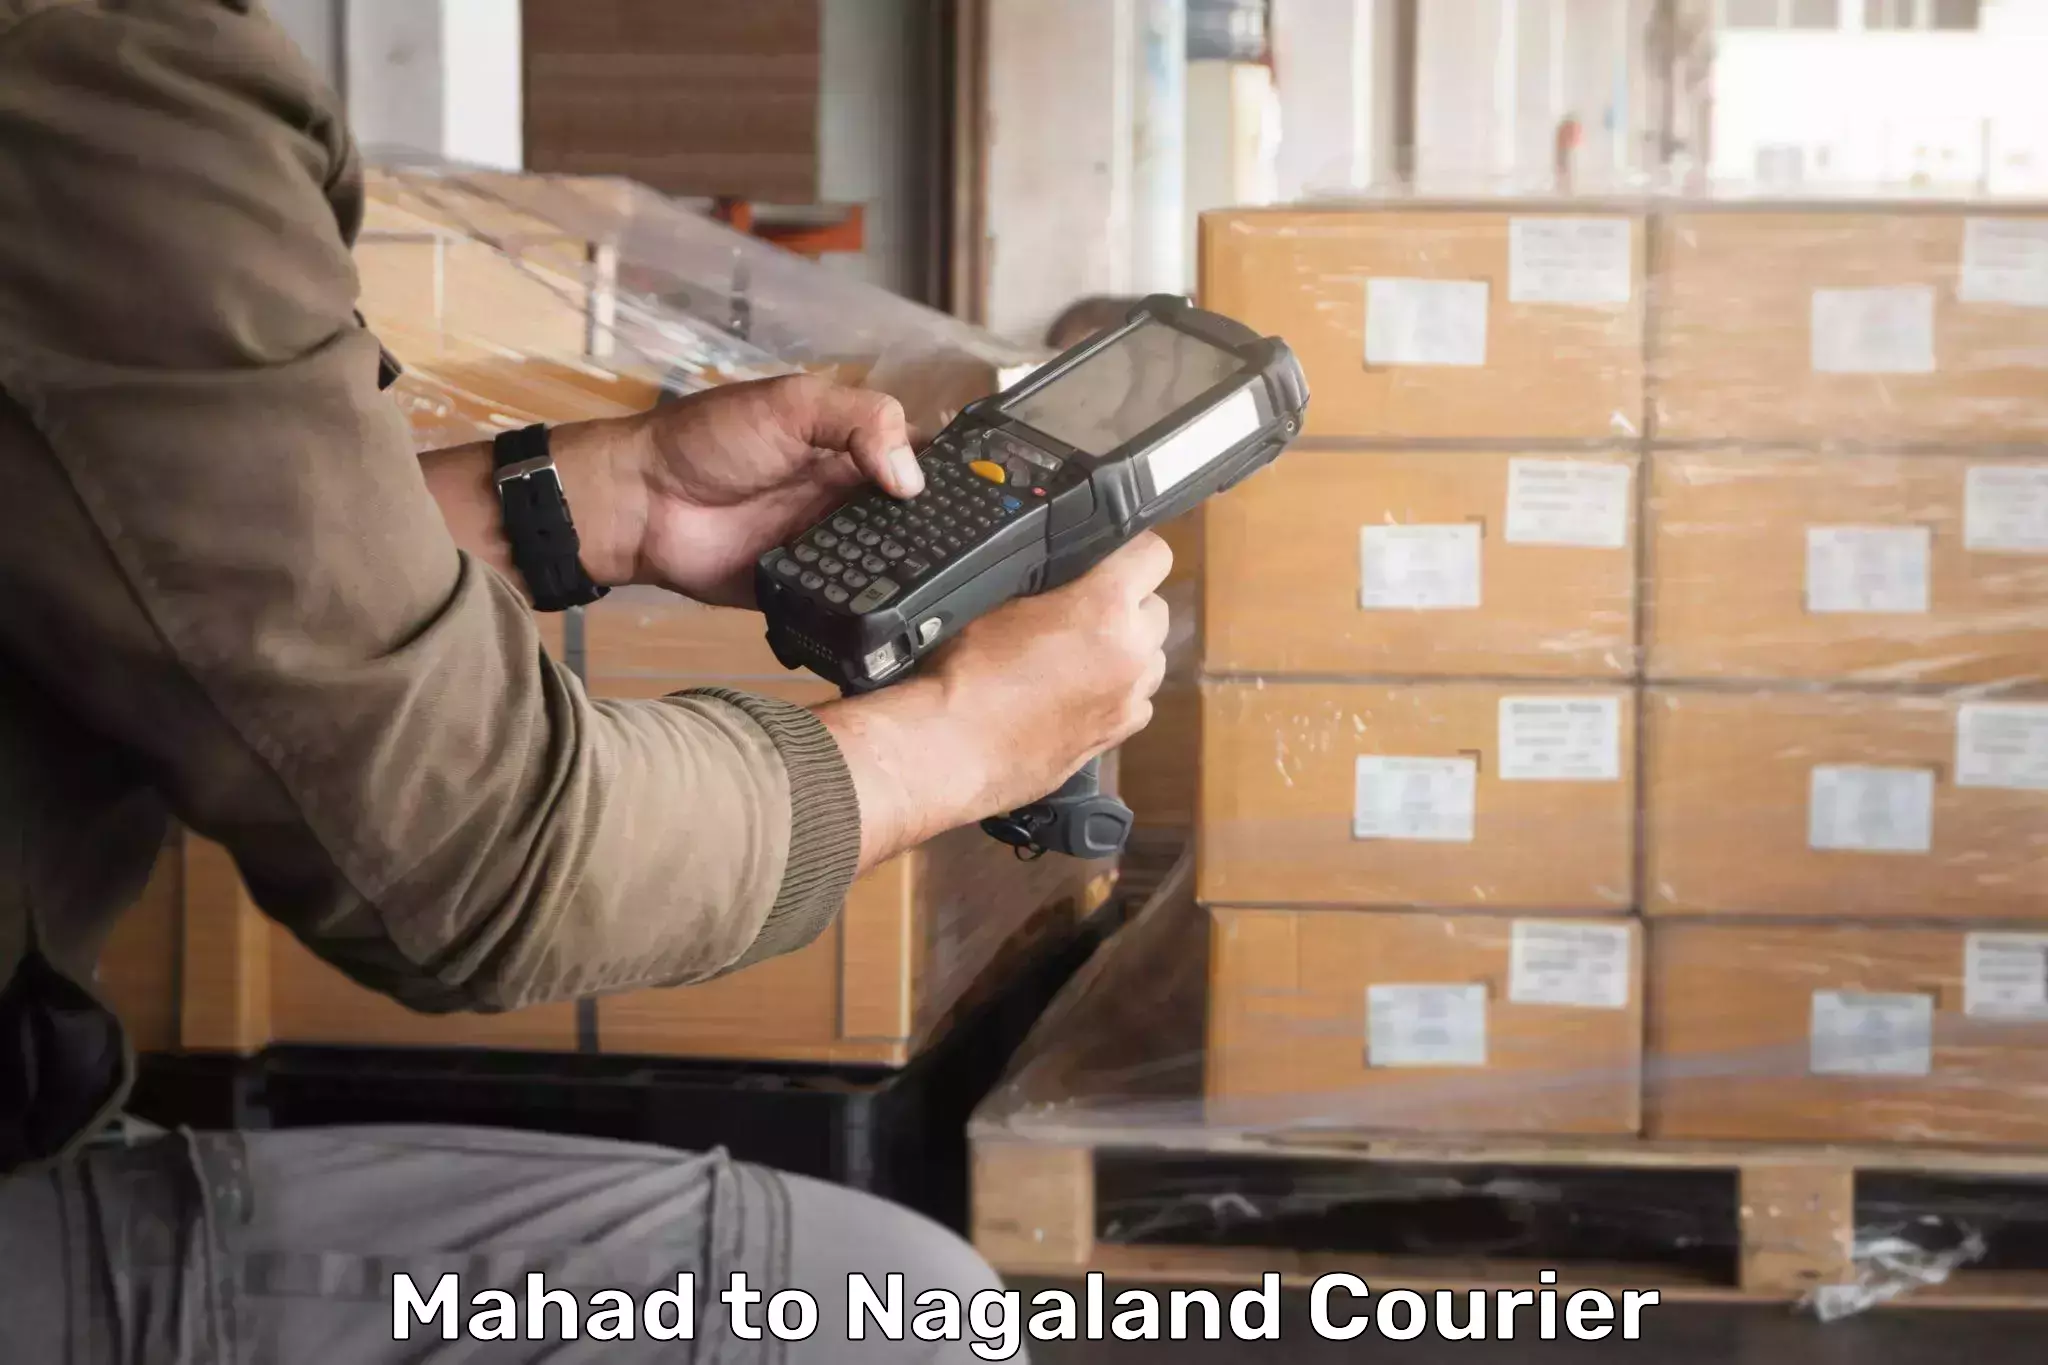 Courier service partnerships Mahad to Nagaland